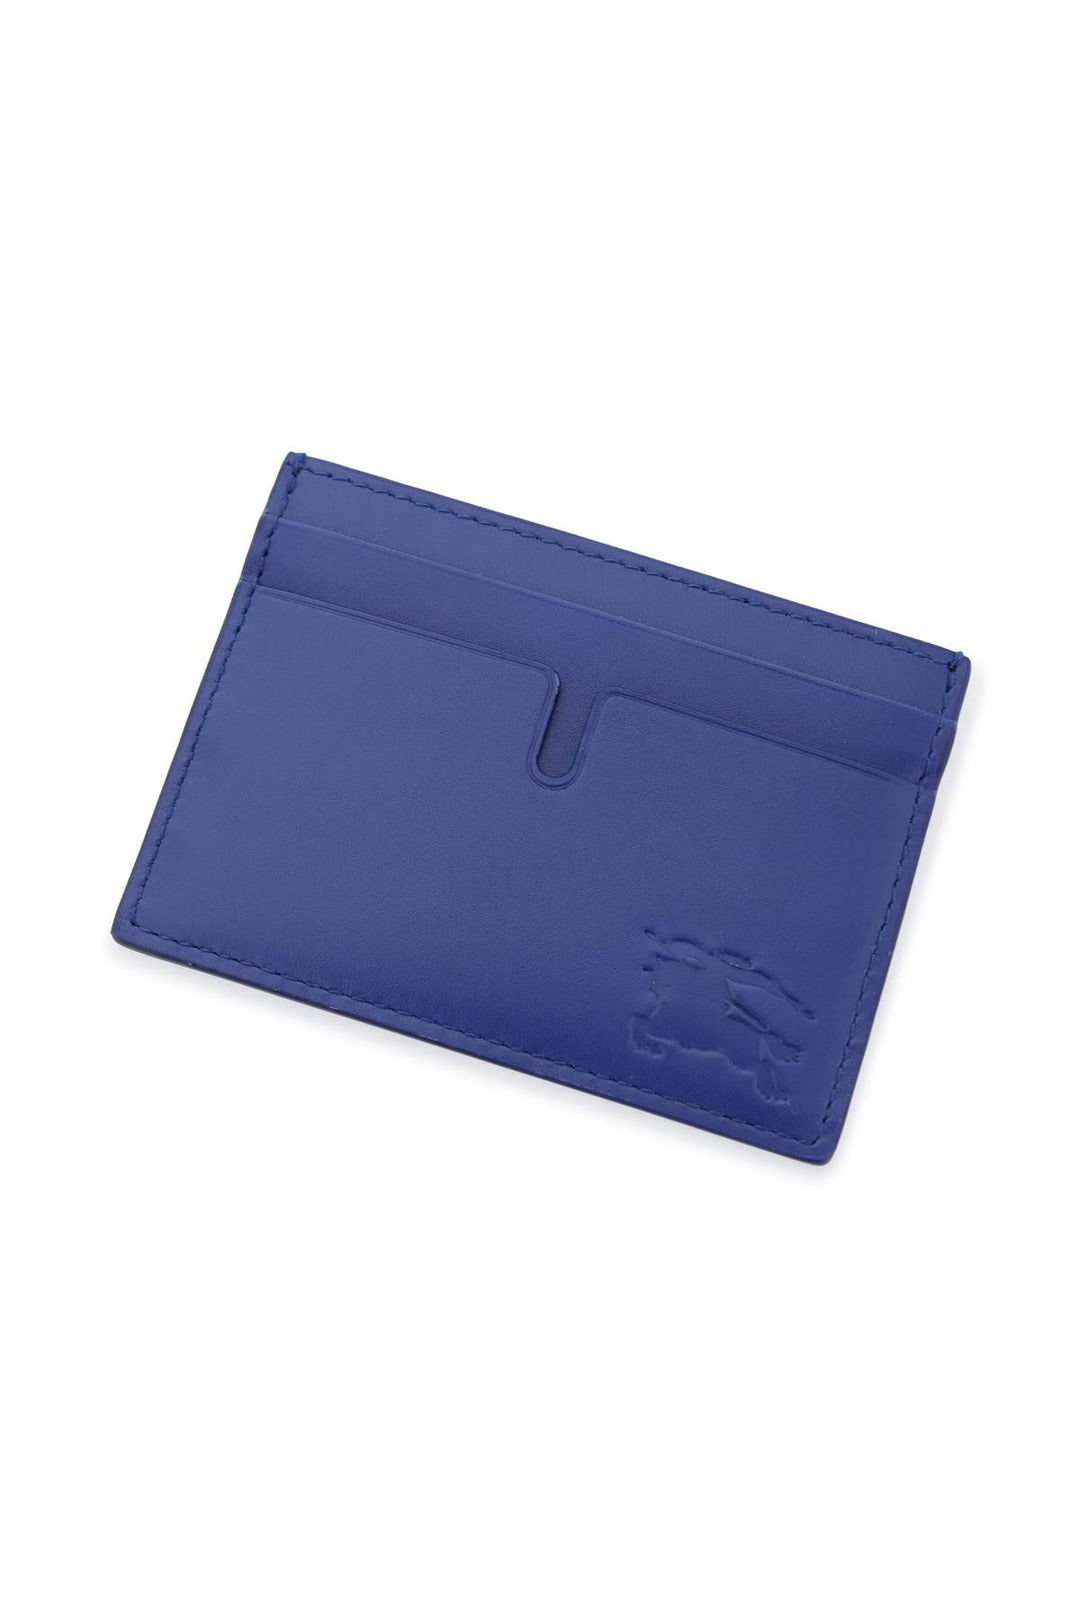 Burberry Ekd Card Holder   Blu